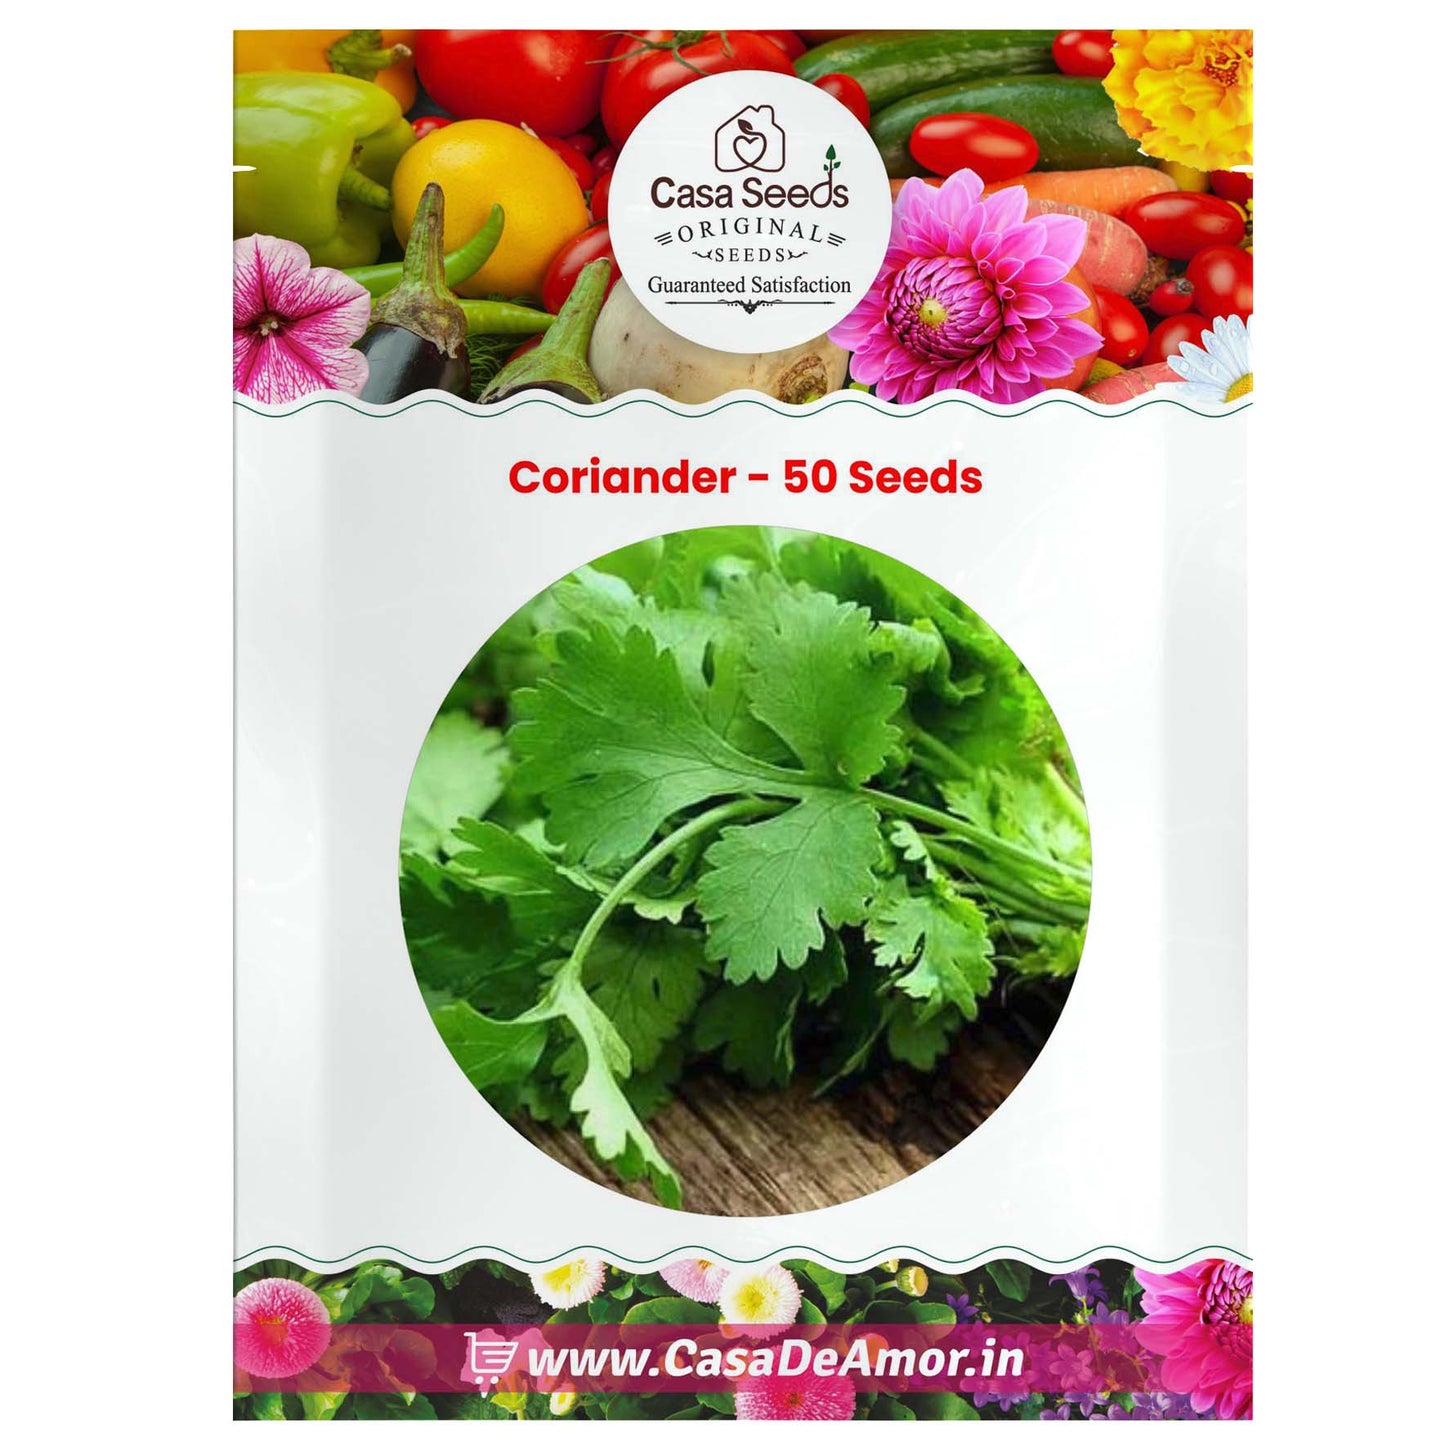 Coriander - 50 Seeds